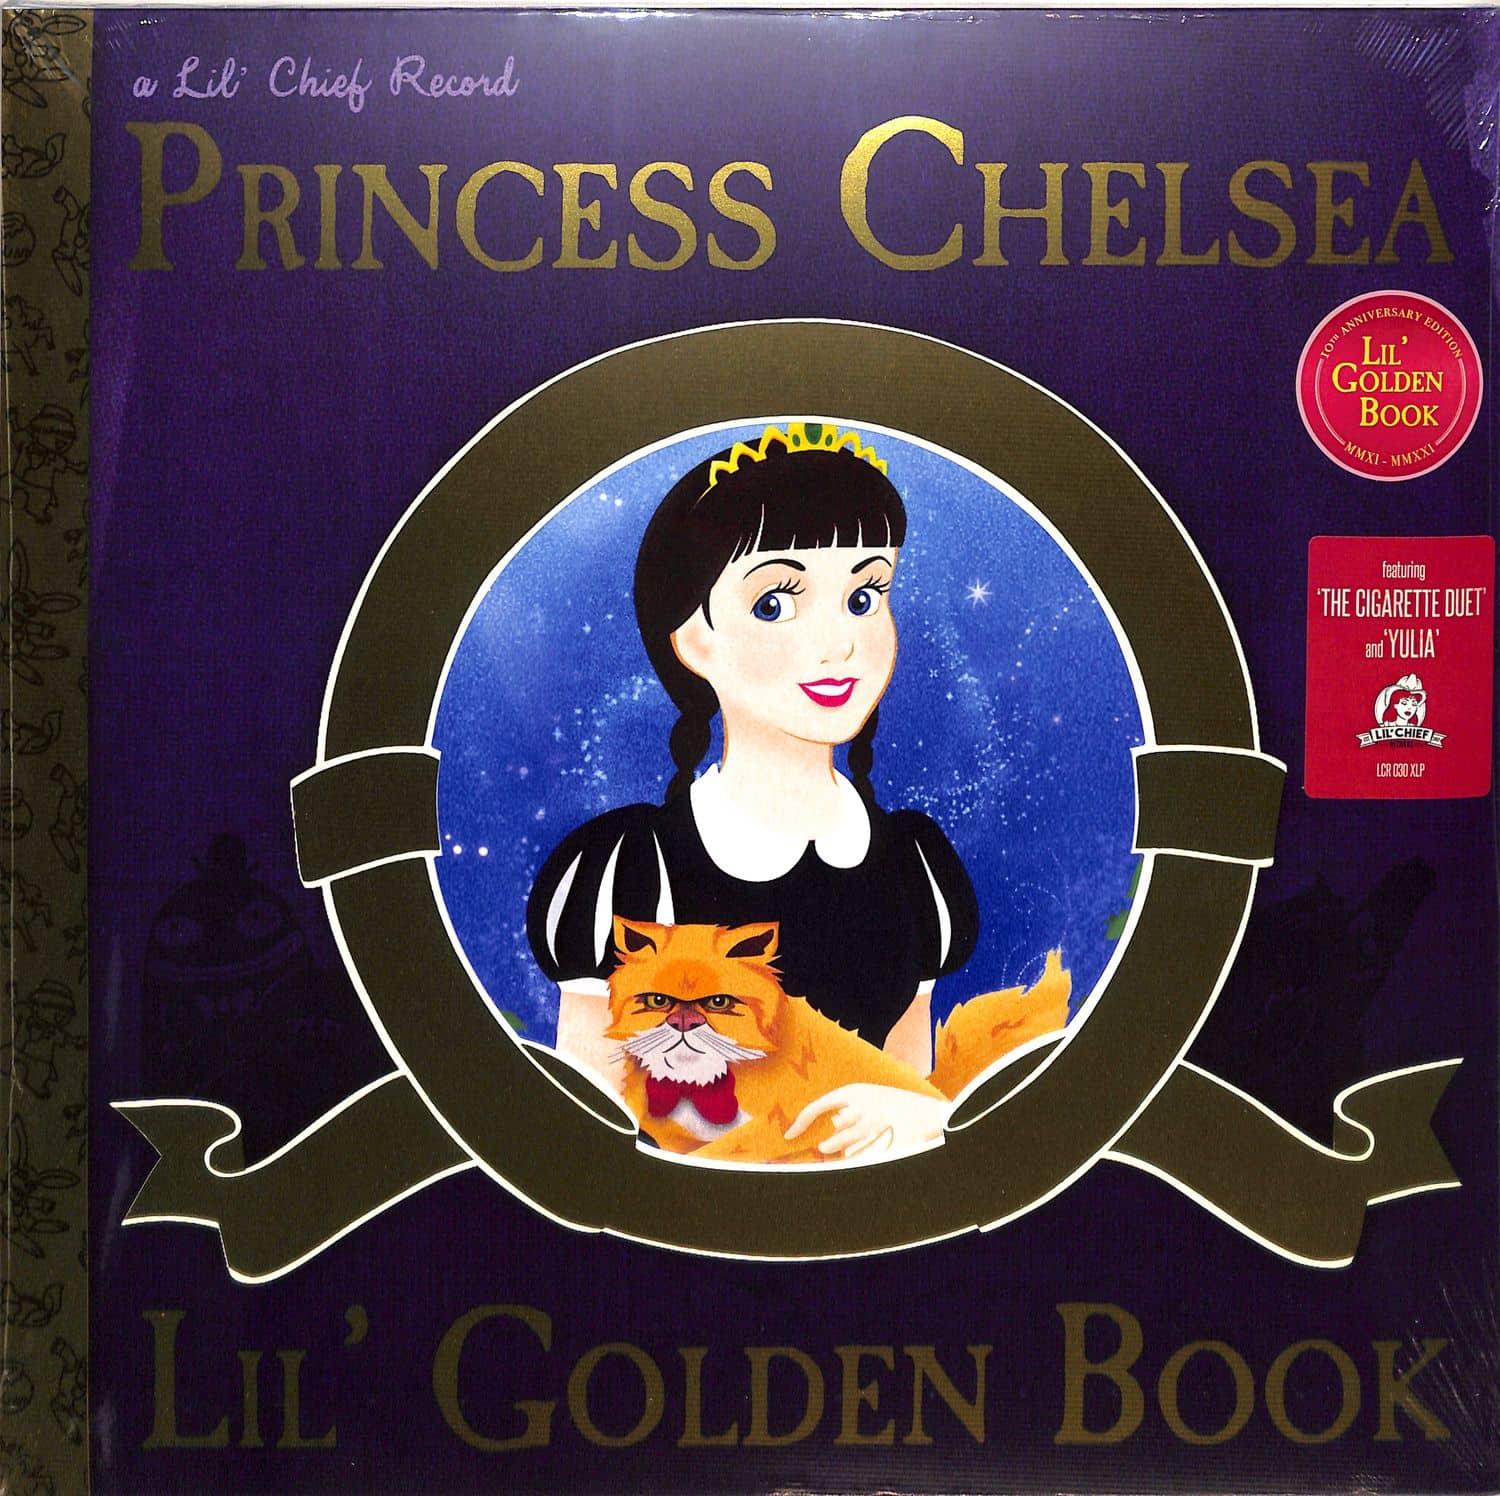 Princess Chelsea - LIL GOLDEN BOOK 